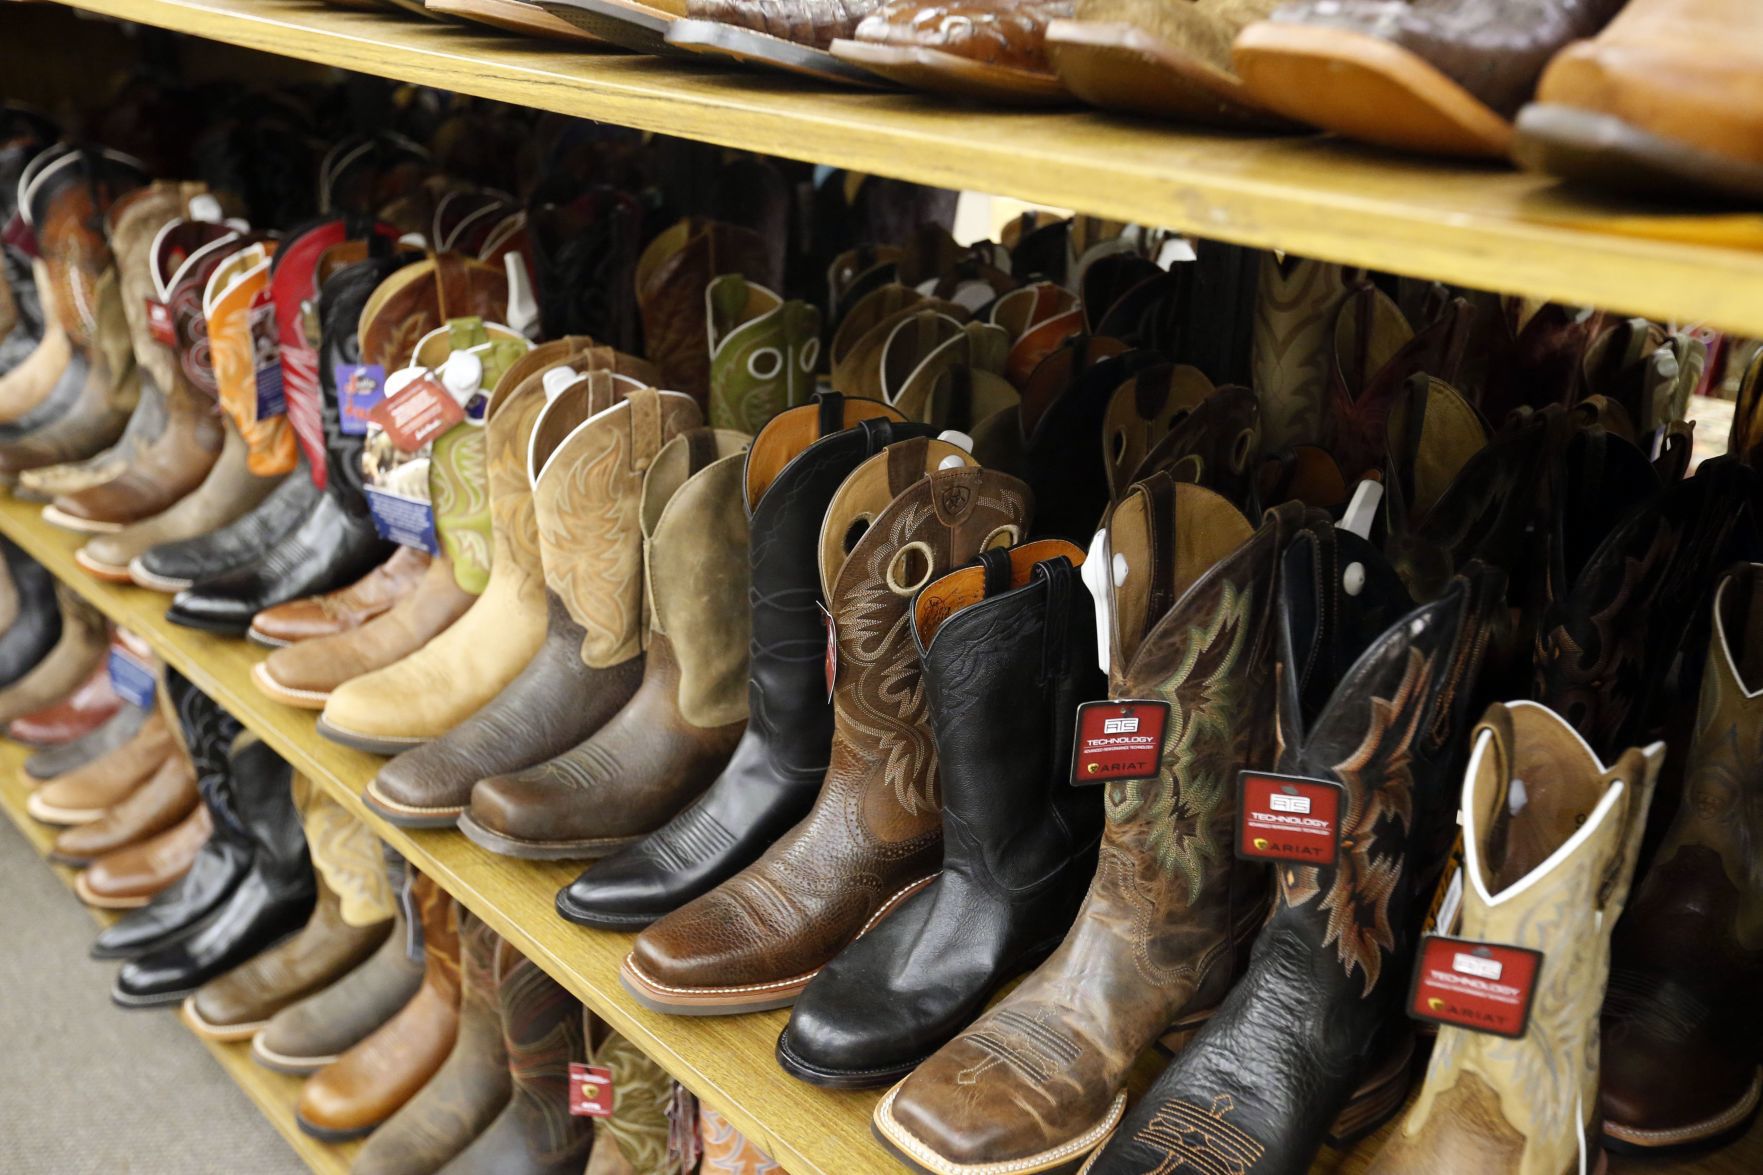 western barn boots